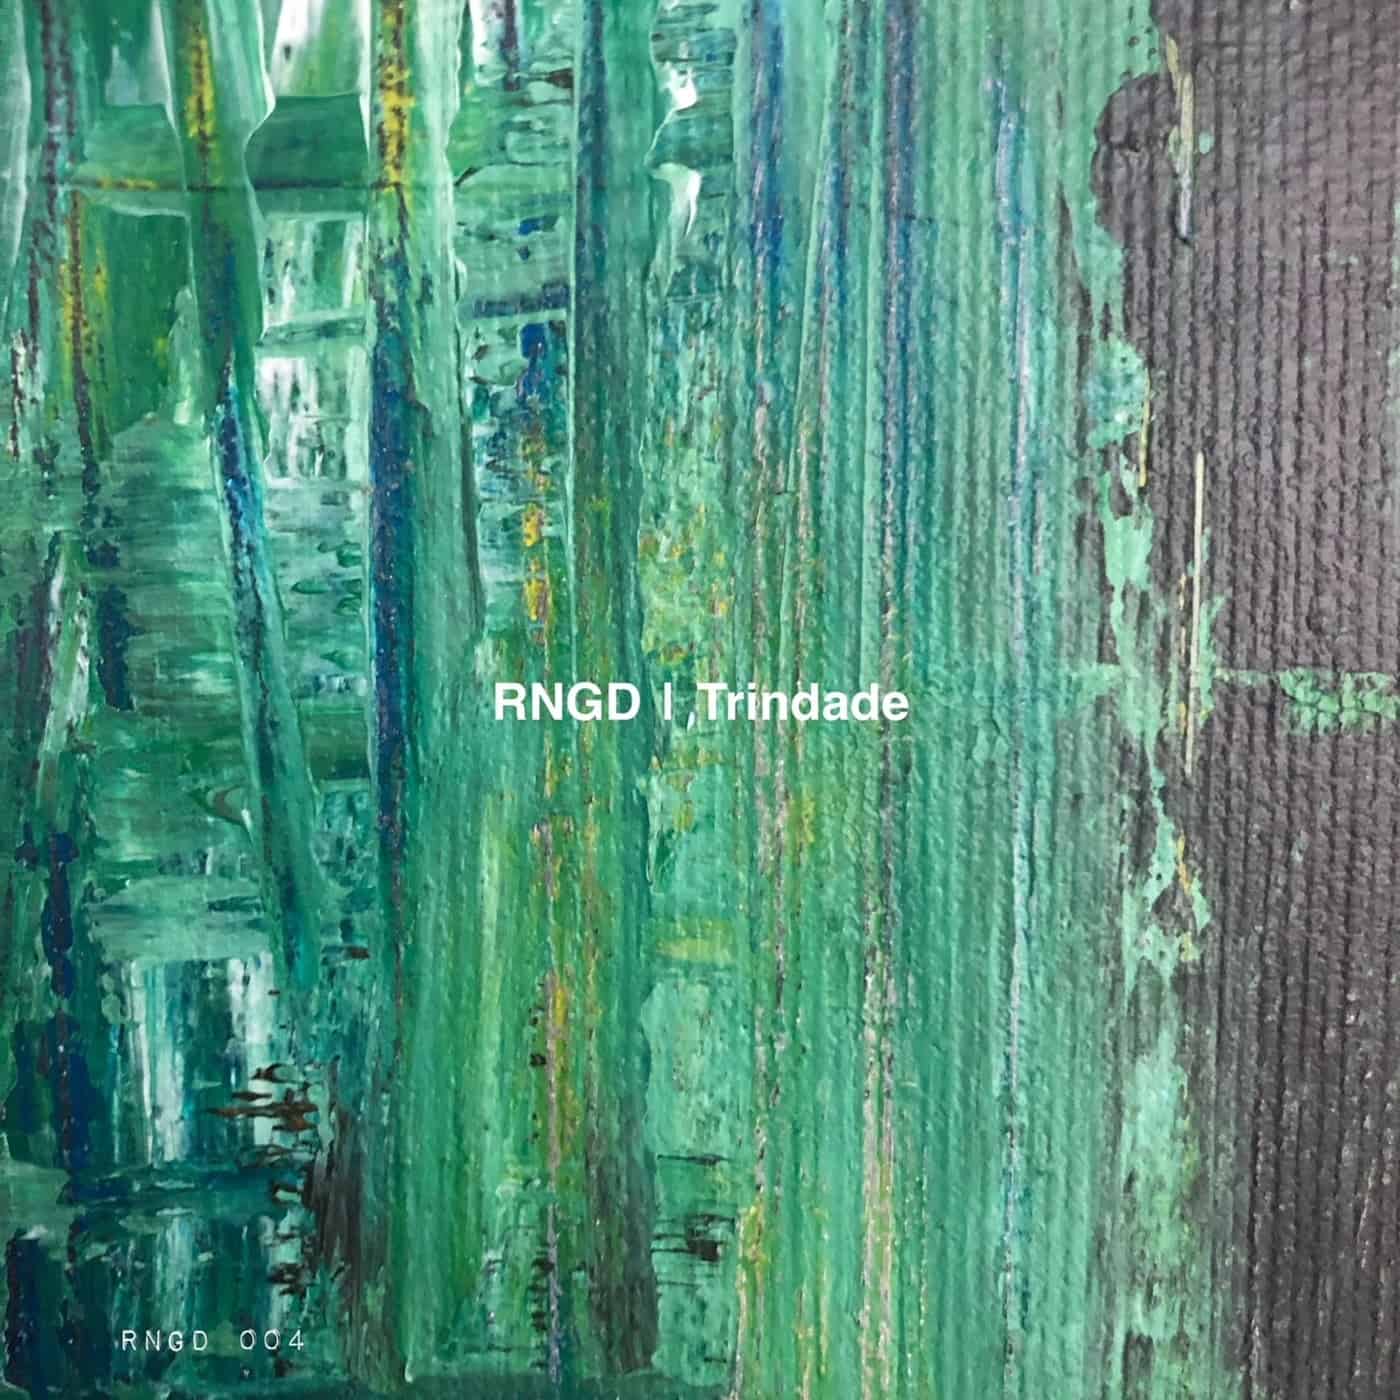 image cover: RNGD - Trindade / RNGD004